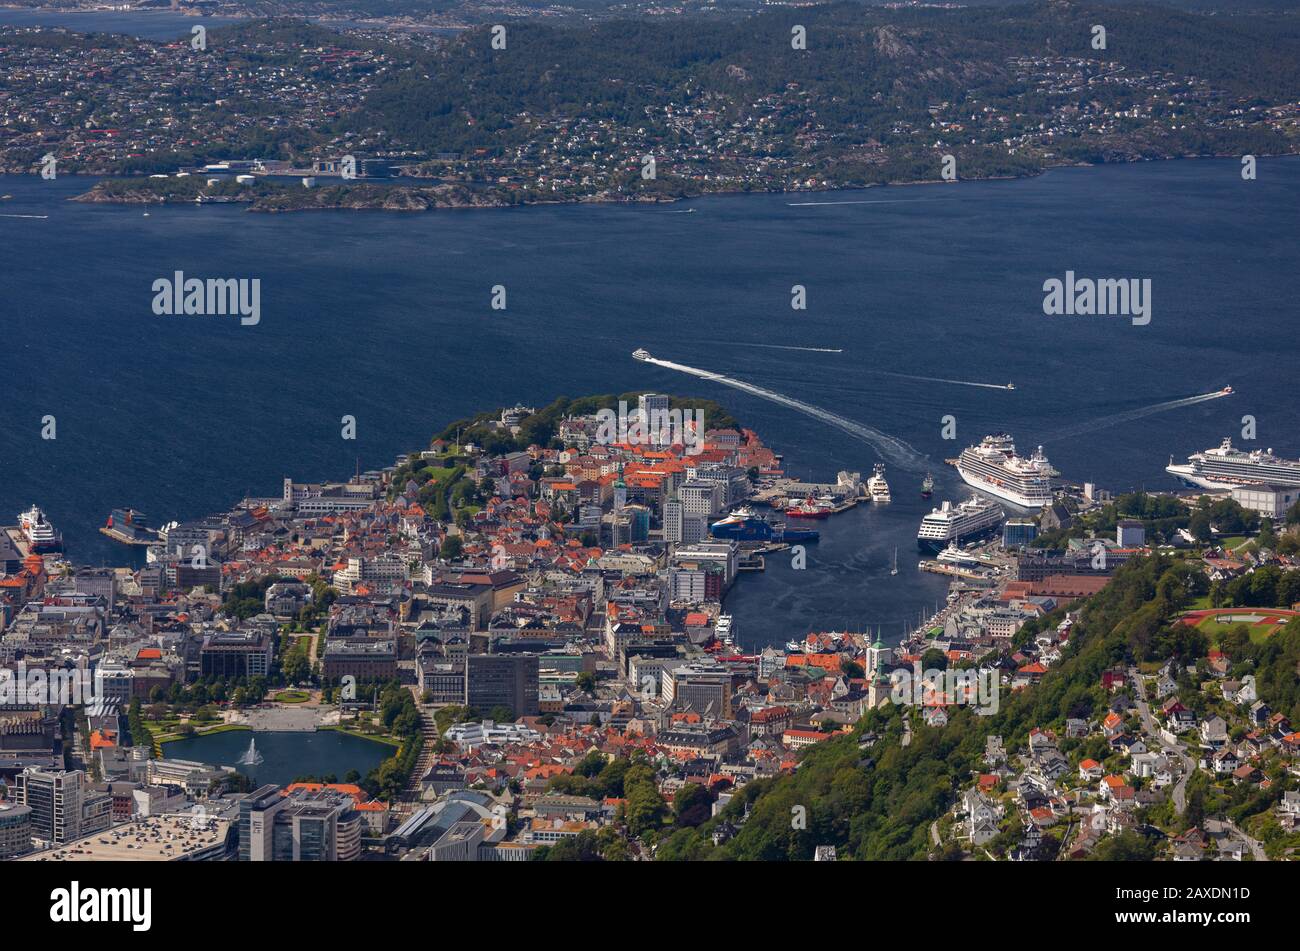 BERGEN, NORWAY - Aerial view of city of Bergen and cruise ships in Vågen harbour. Stock Photo